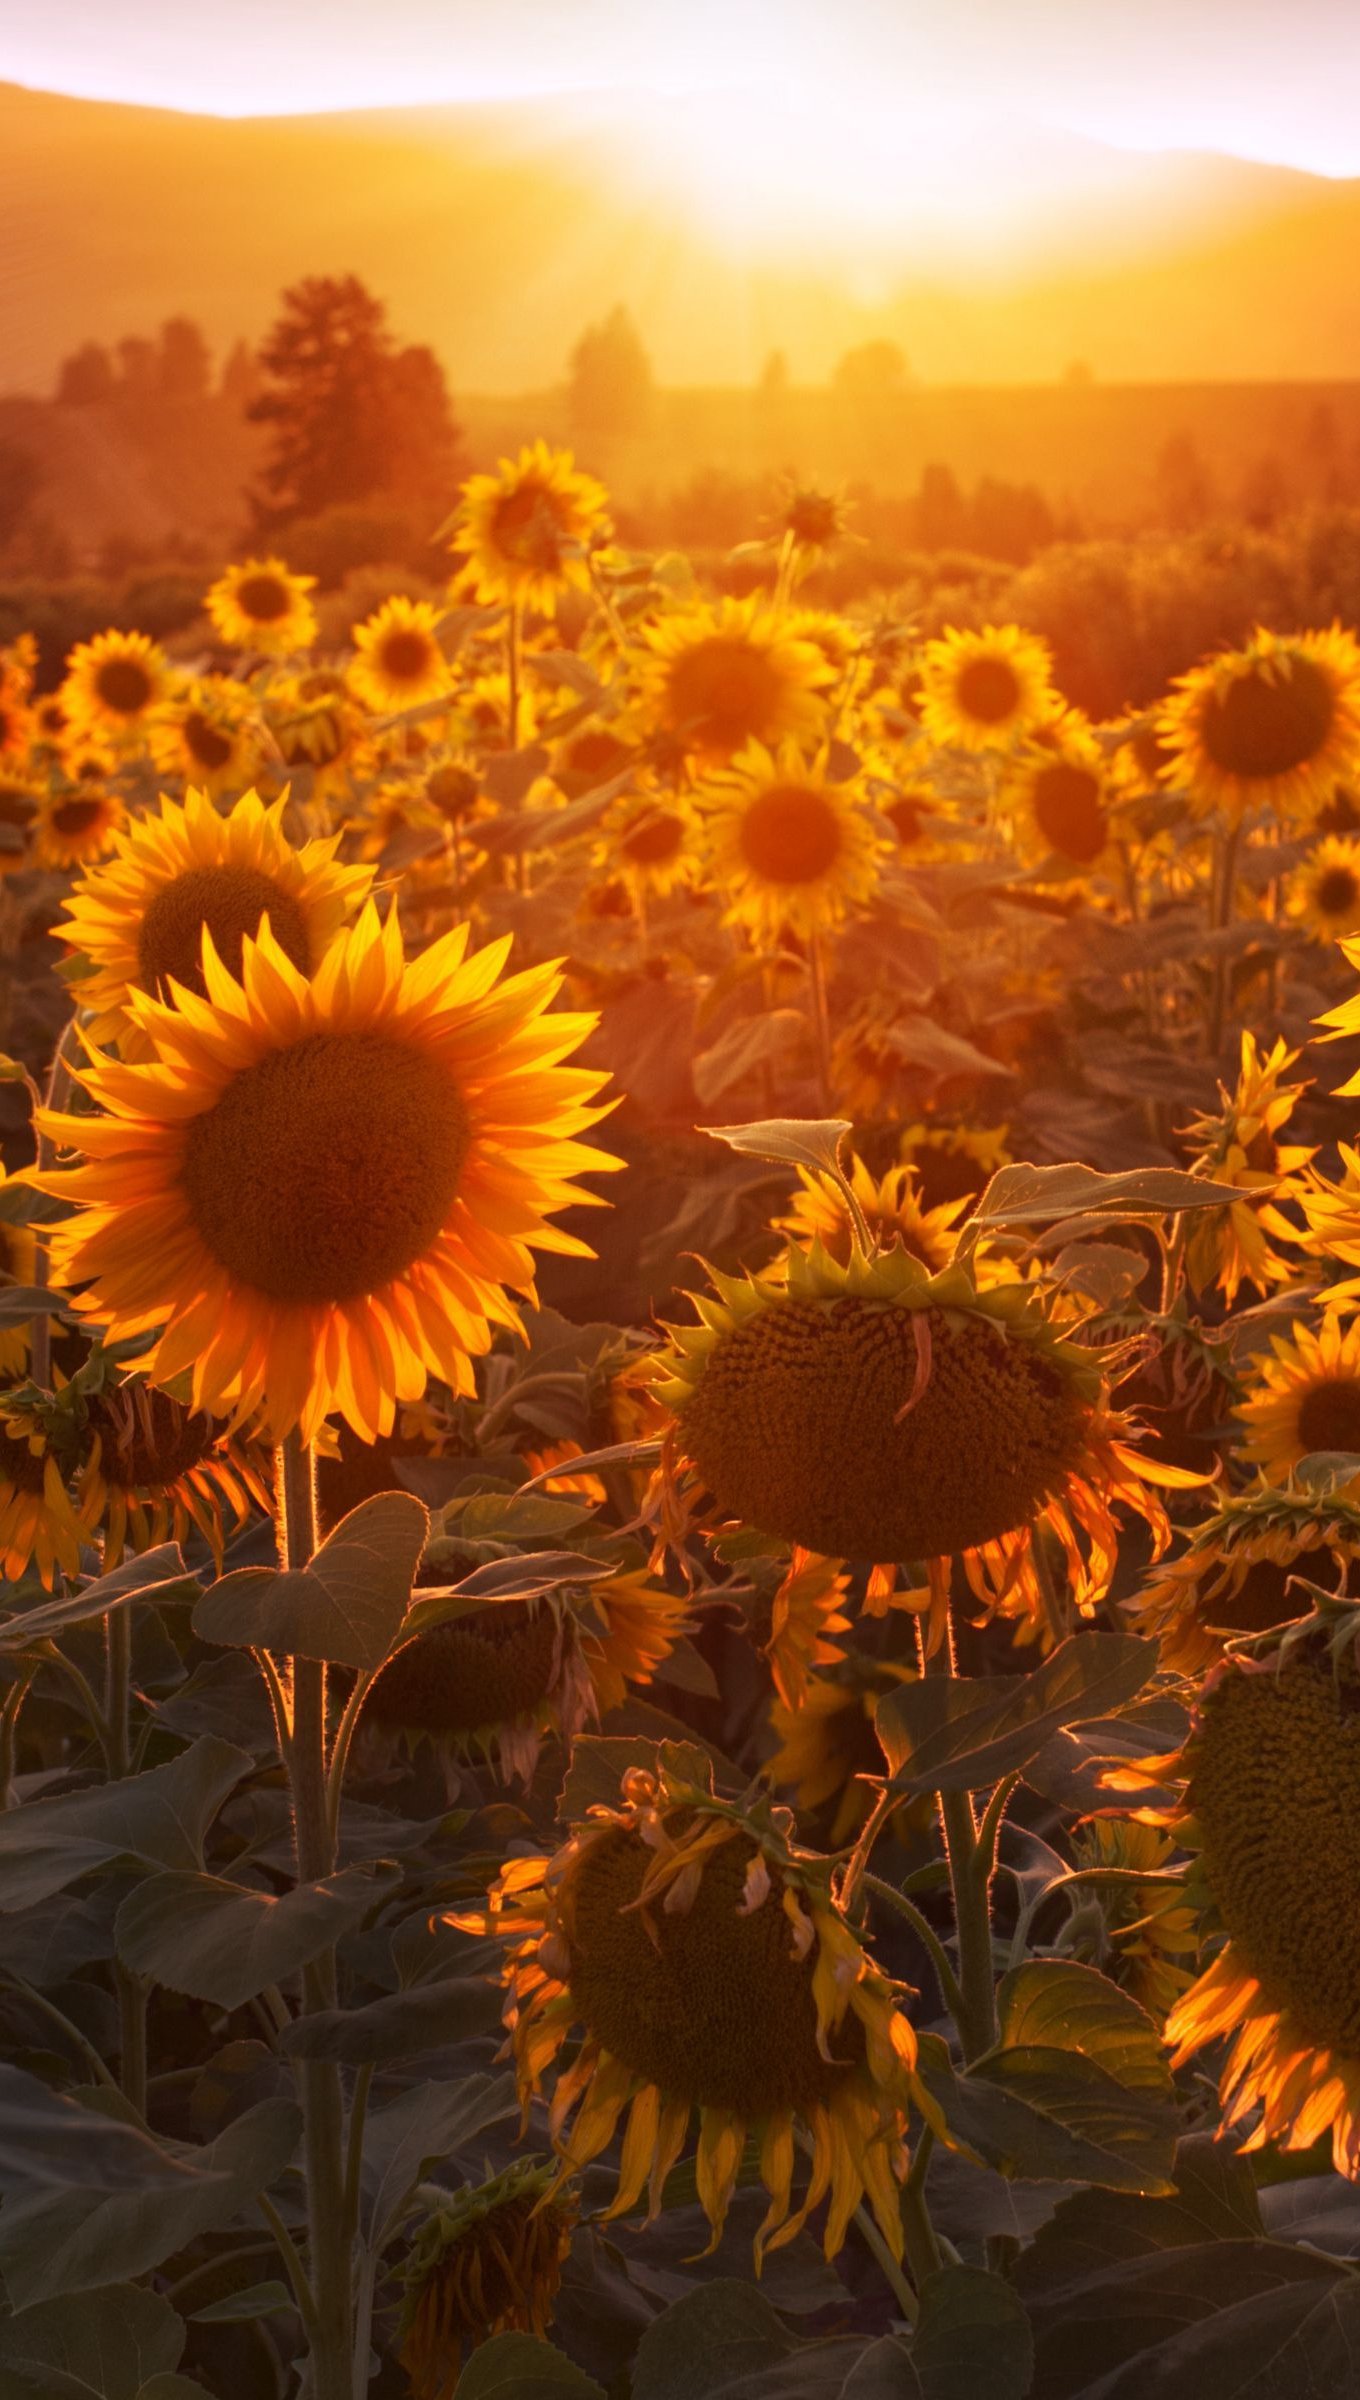 Sunflowers at sunset Wallpaper 4k Ultra HD ID:10653